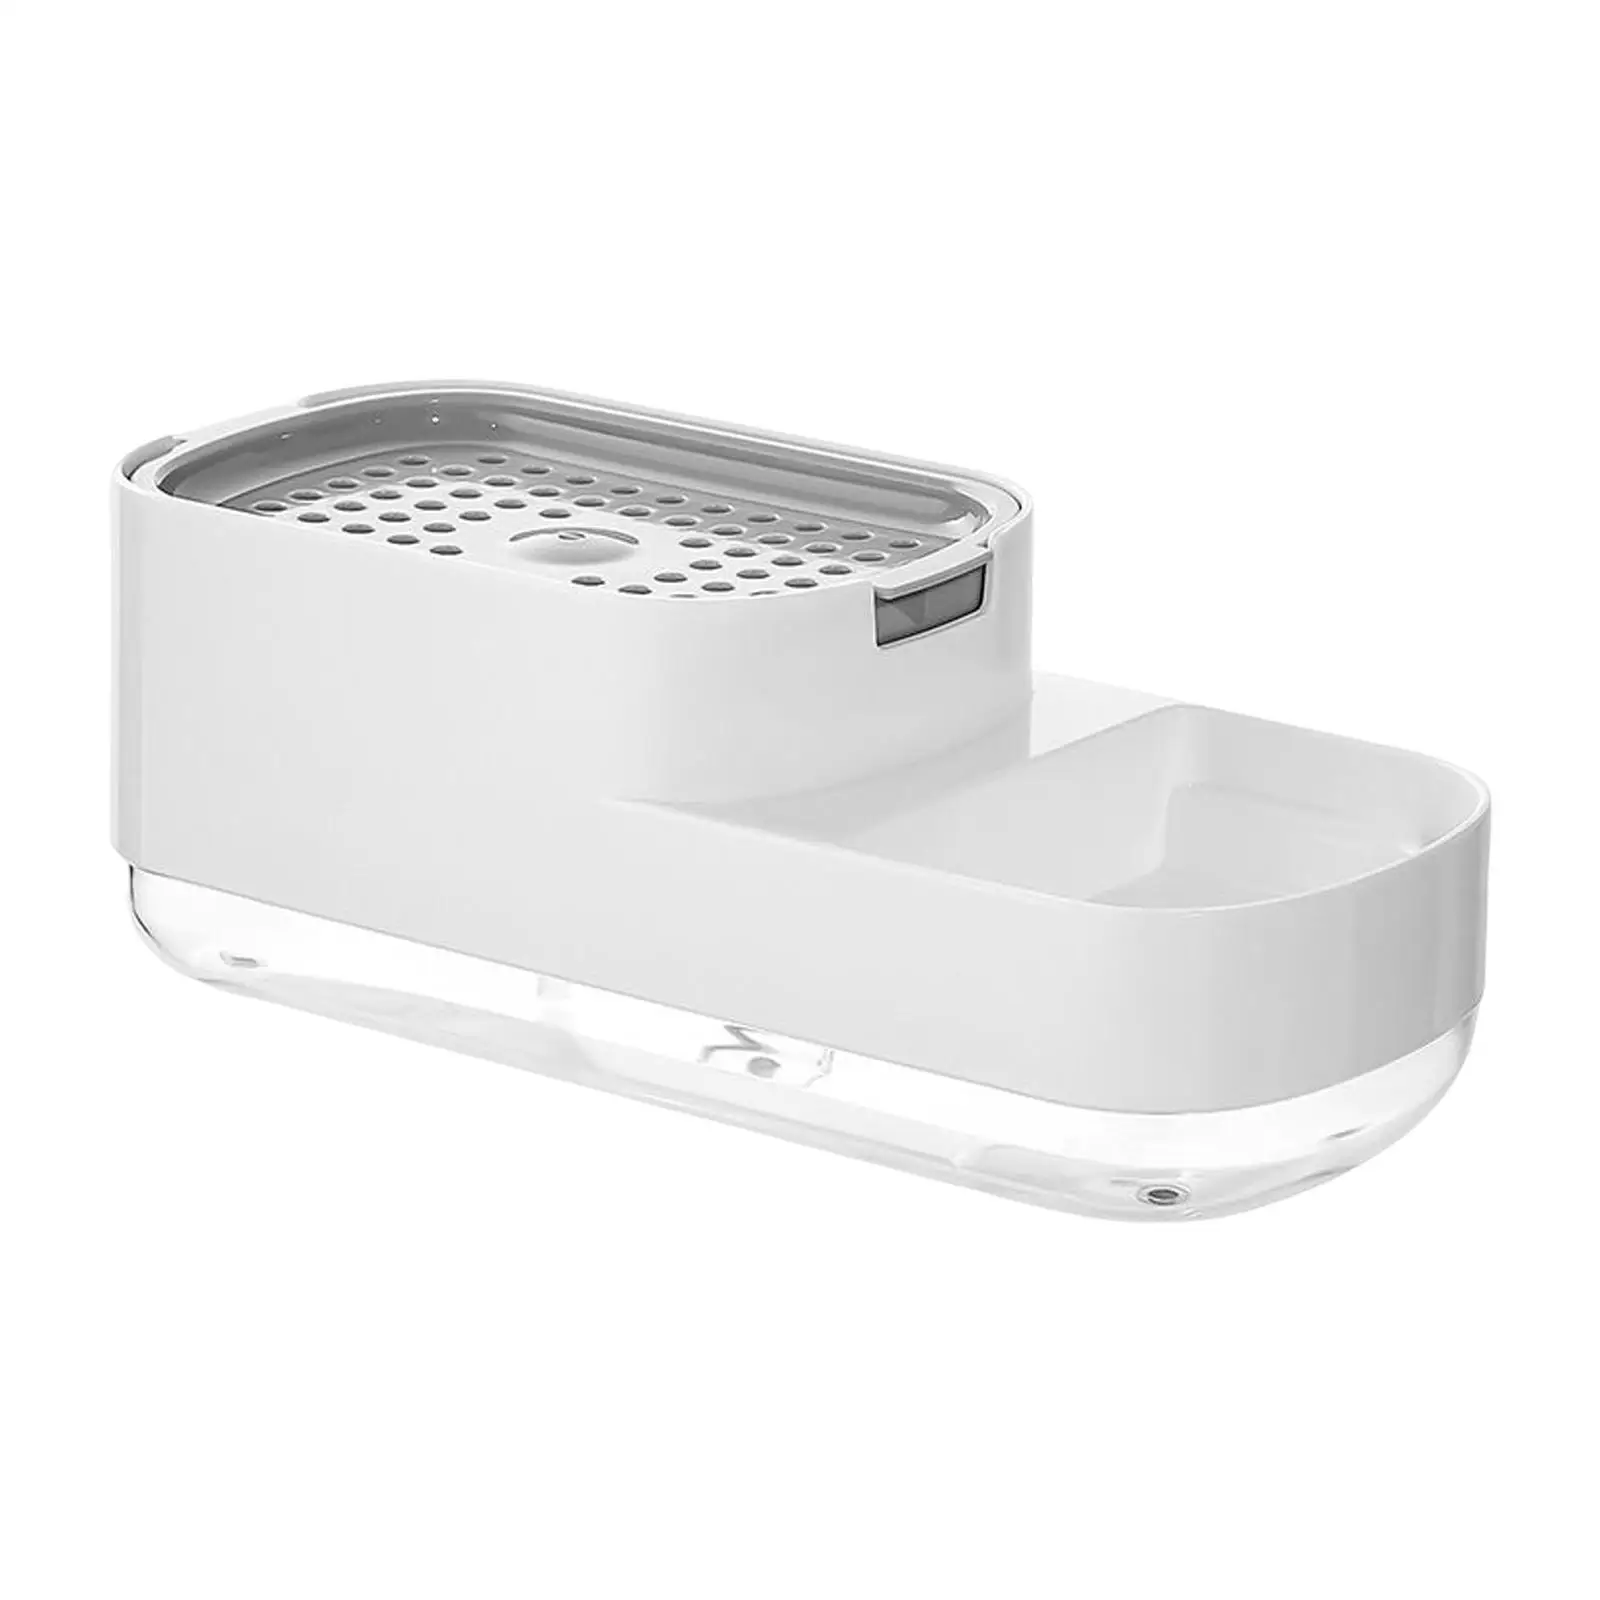 Soap Pump Dispenser Draining Tray Caddy Organizer for Bathroom Kitchen